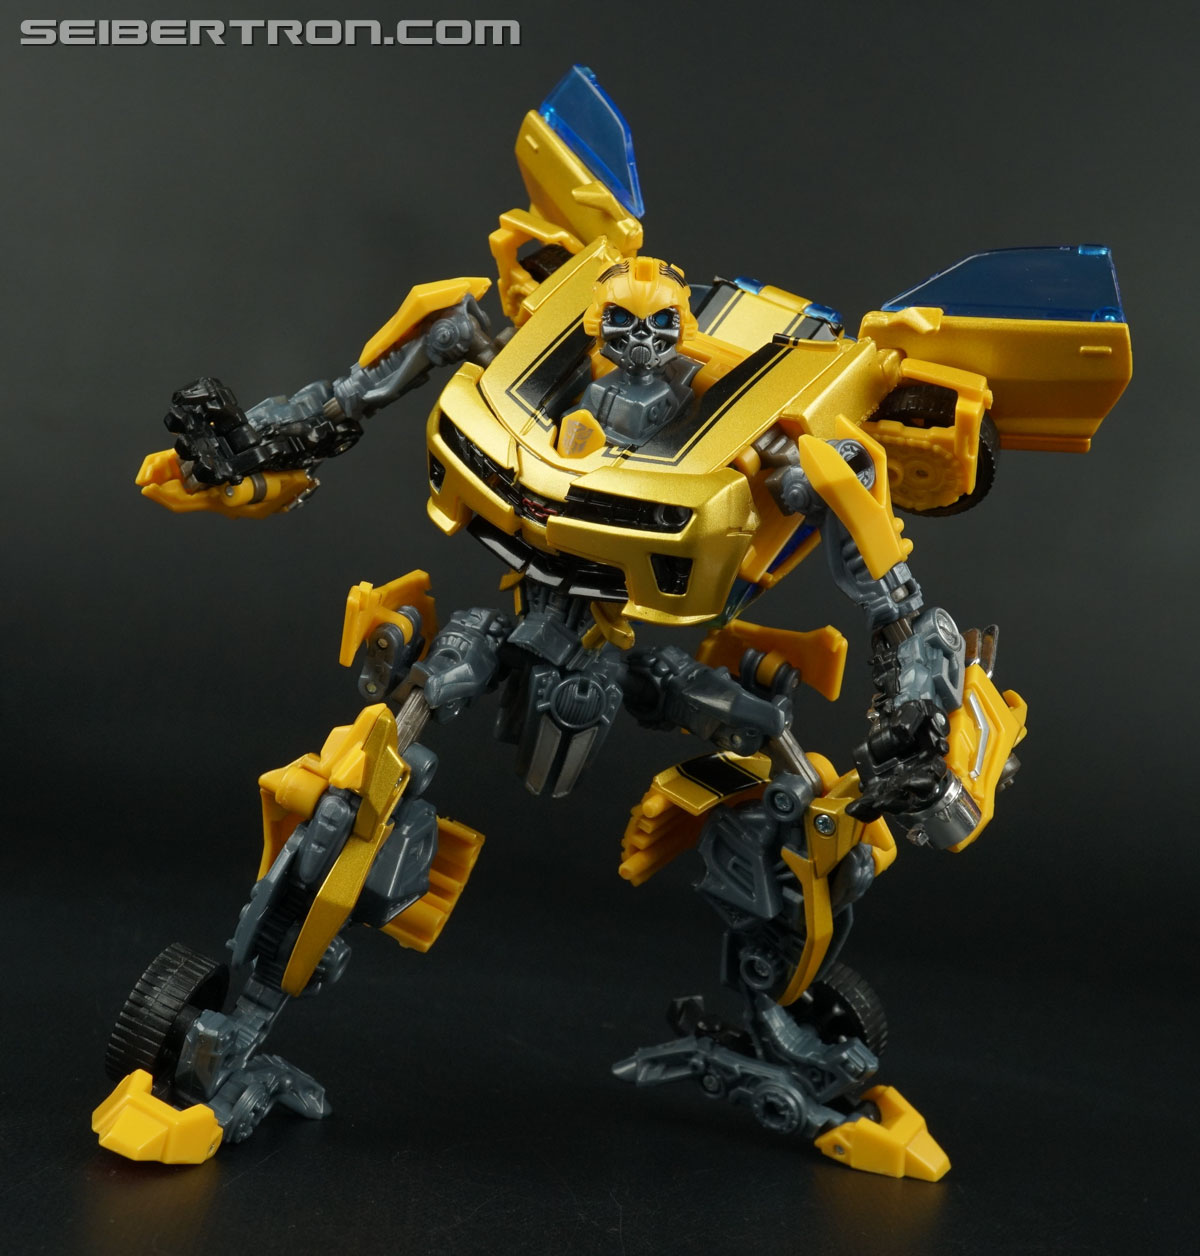 Transformers Takara Tomy: Movie Advanced Battle Blade Bumblebee (Image #70 of 111)